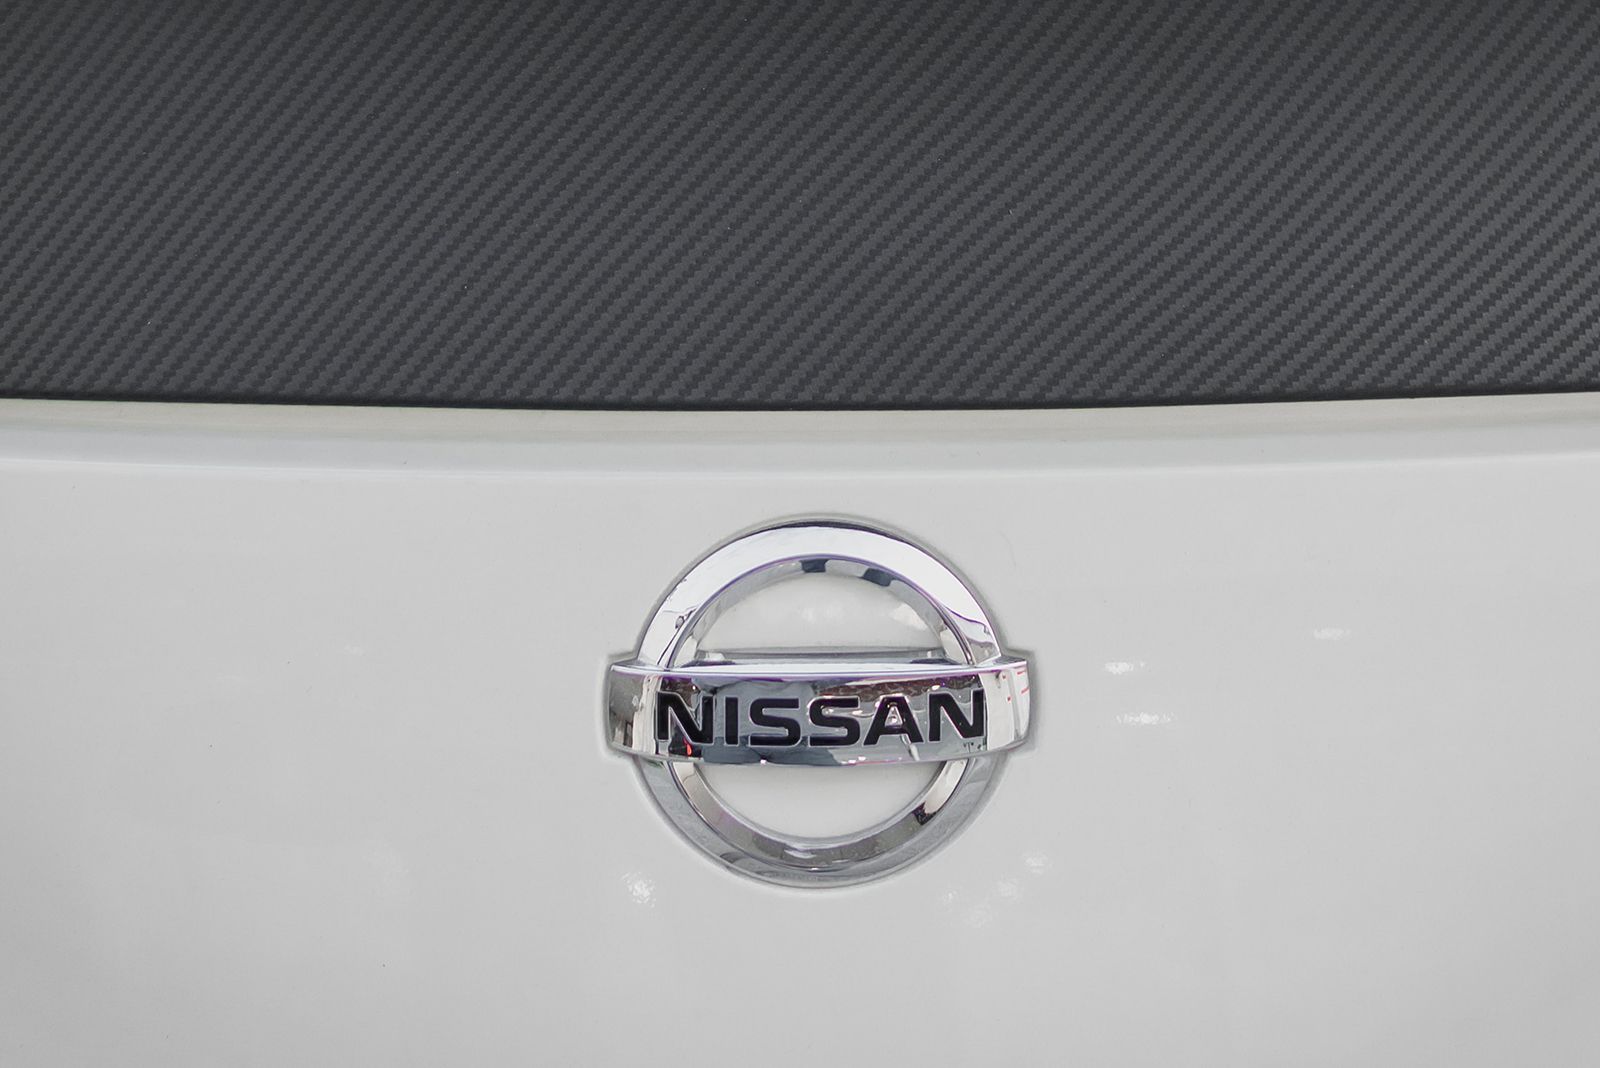 Nissan image 1